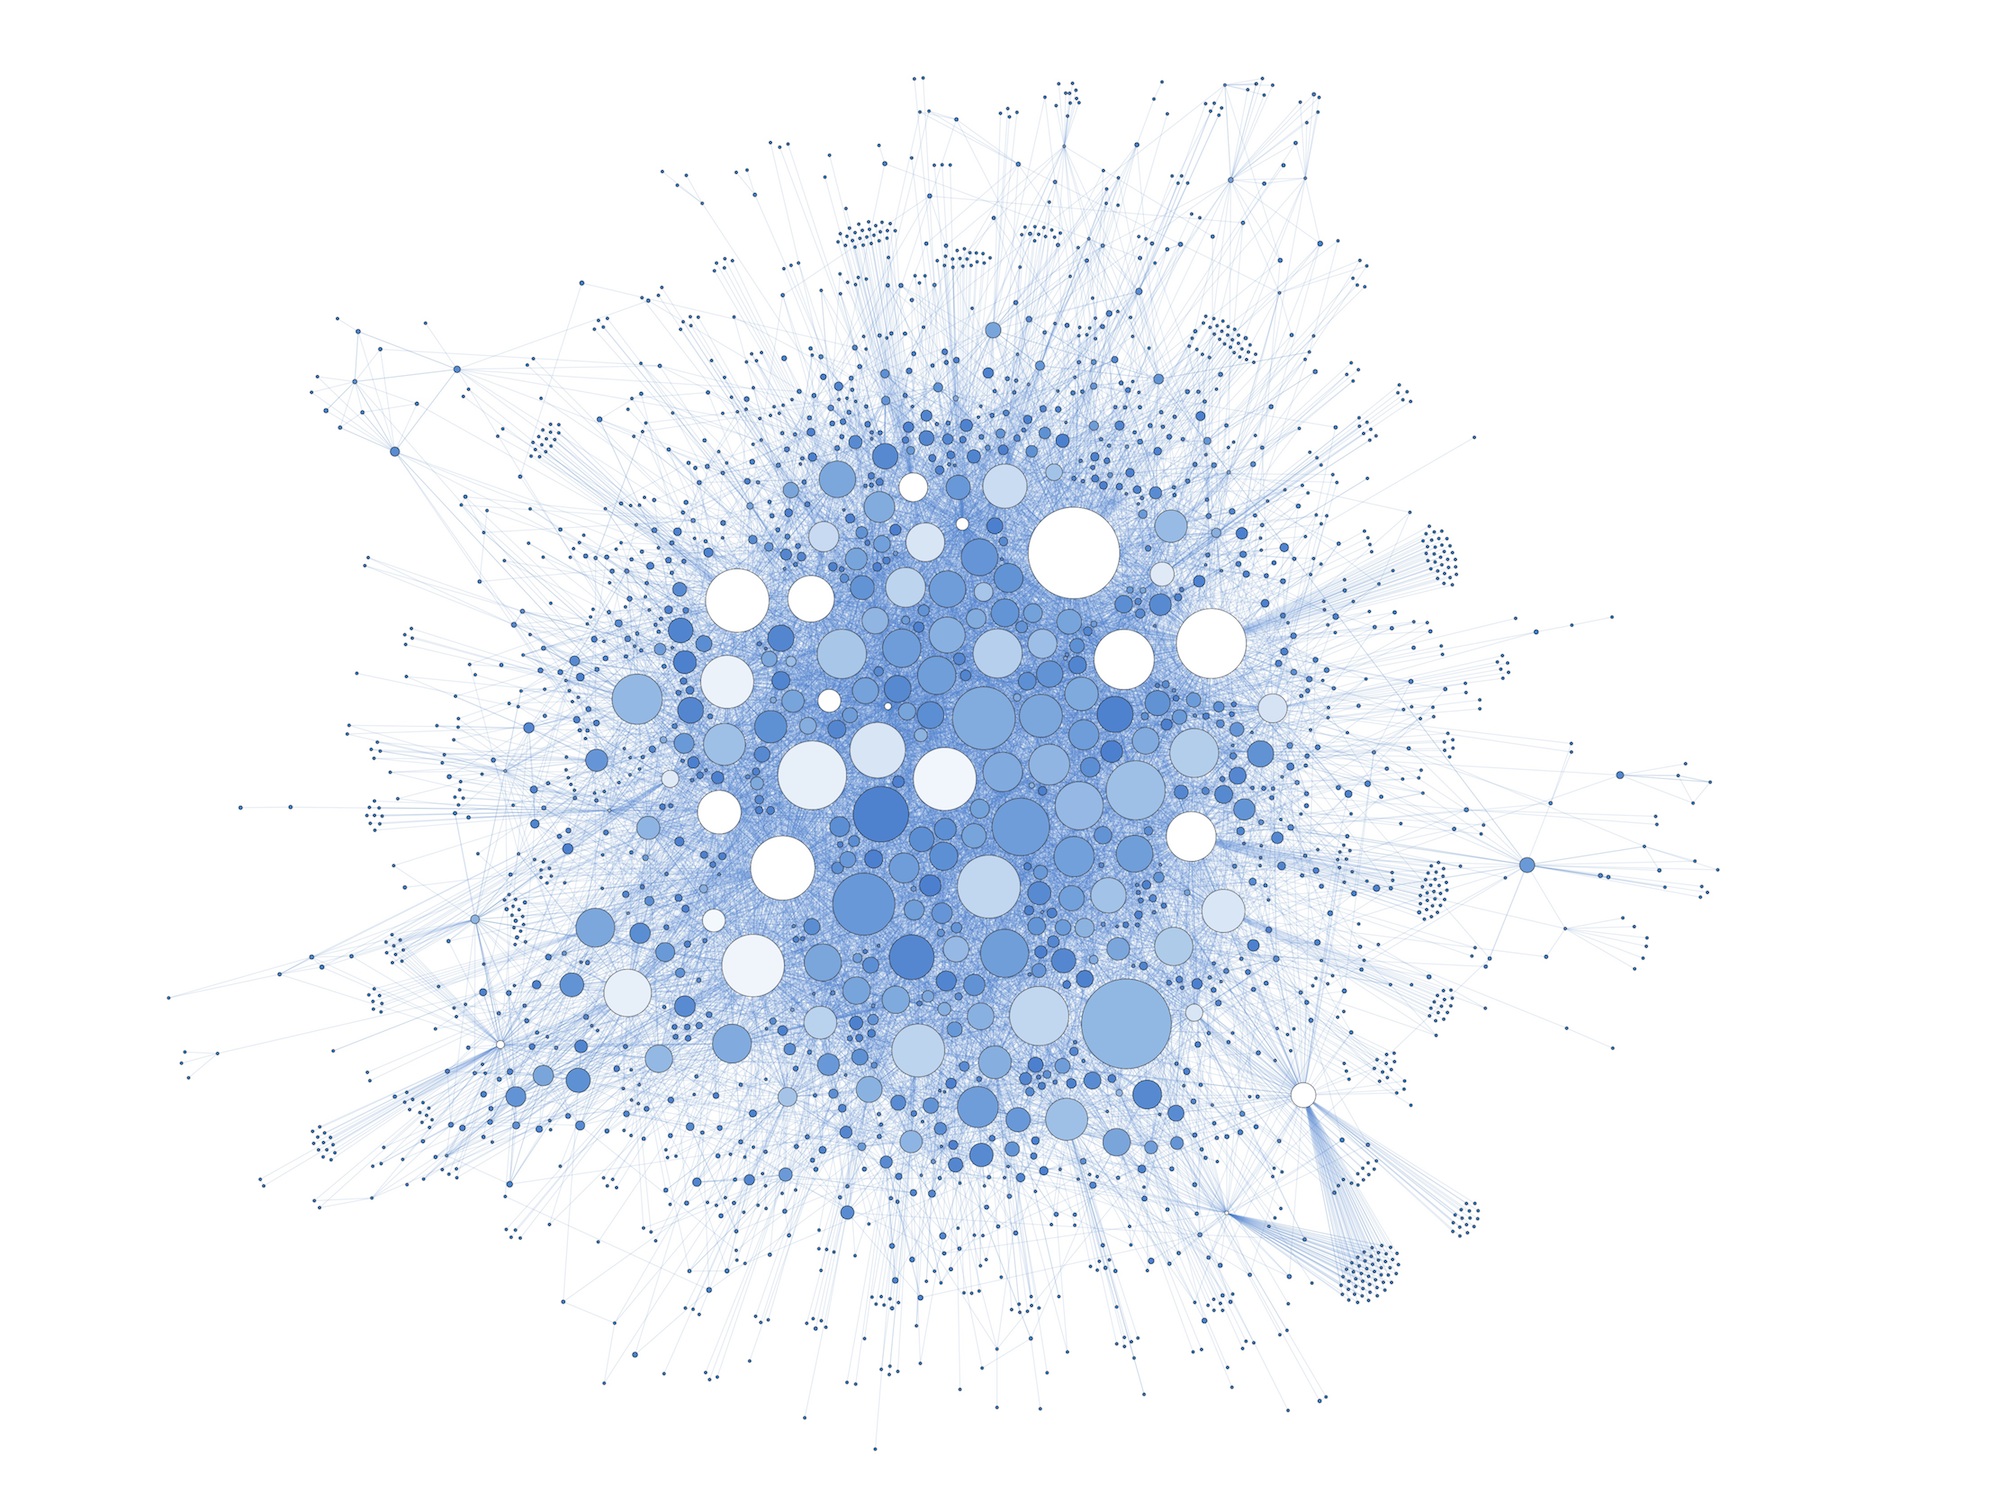 [DataViz] The digital humanities network on Twitter (#DH2014)